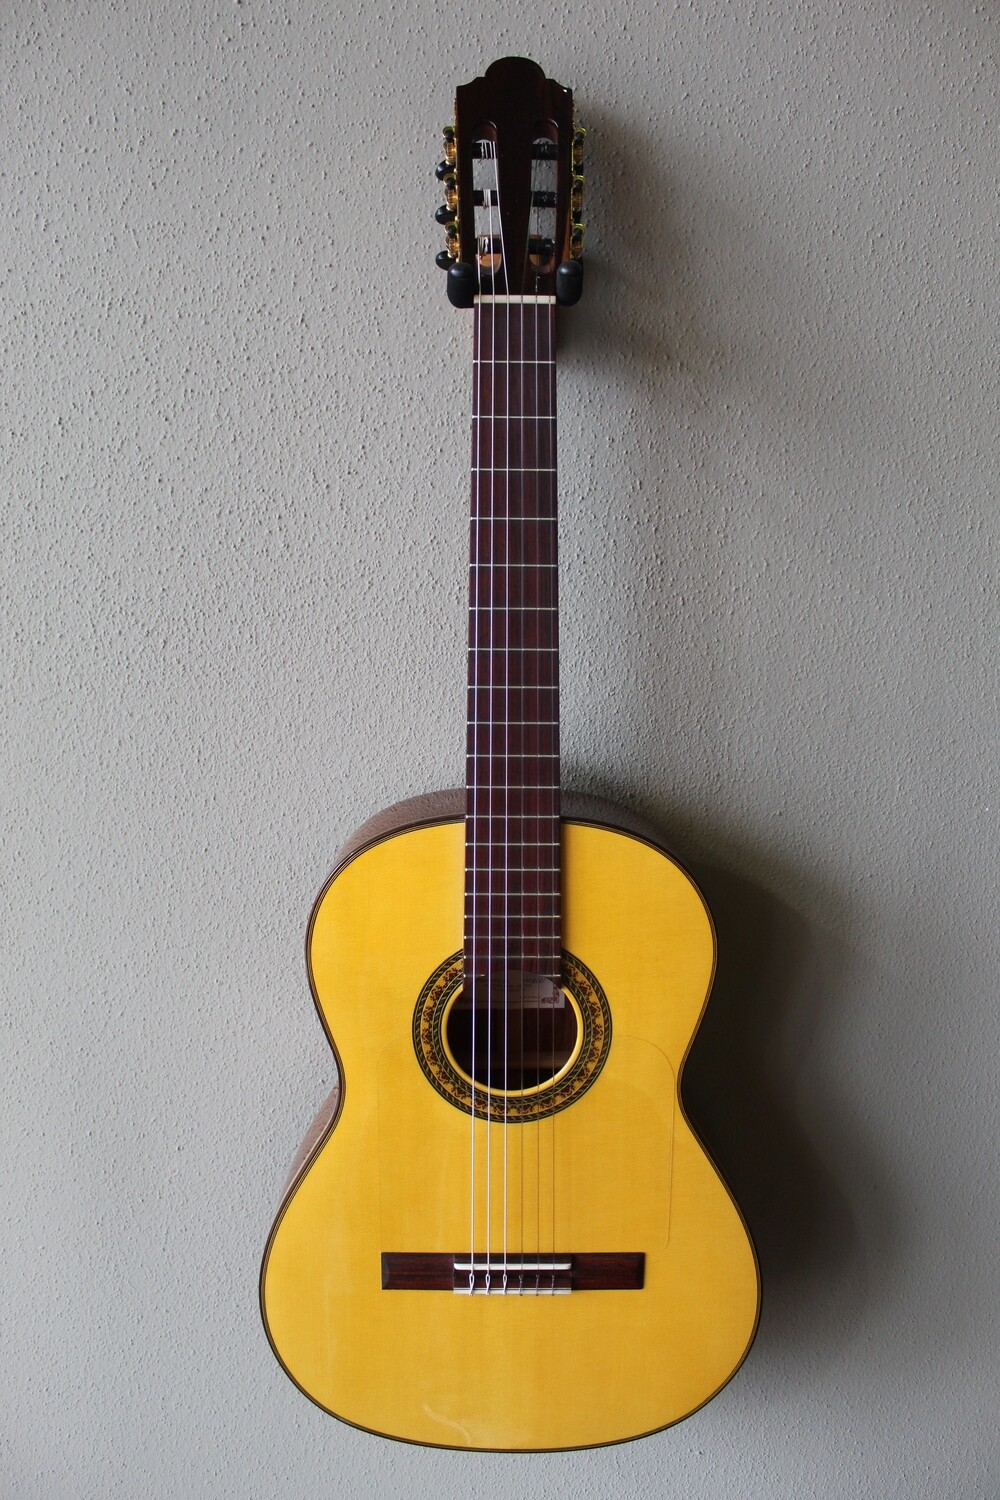 Marlon (Francisco) Navarro Flamenco Negra Guitar - 640 Scale